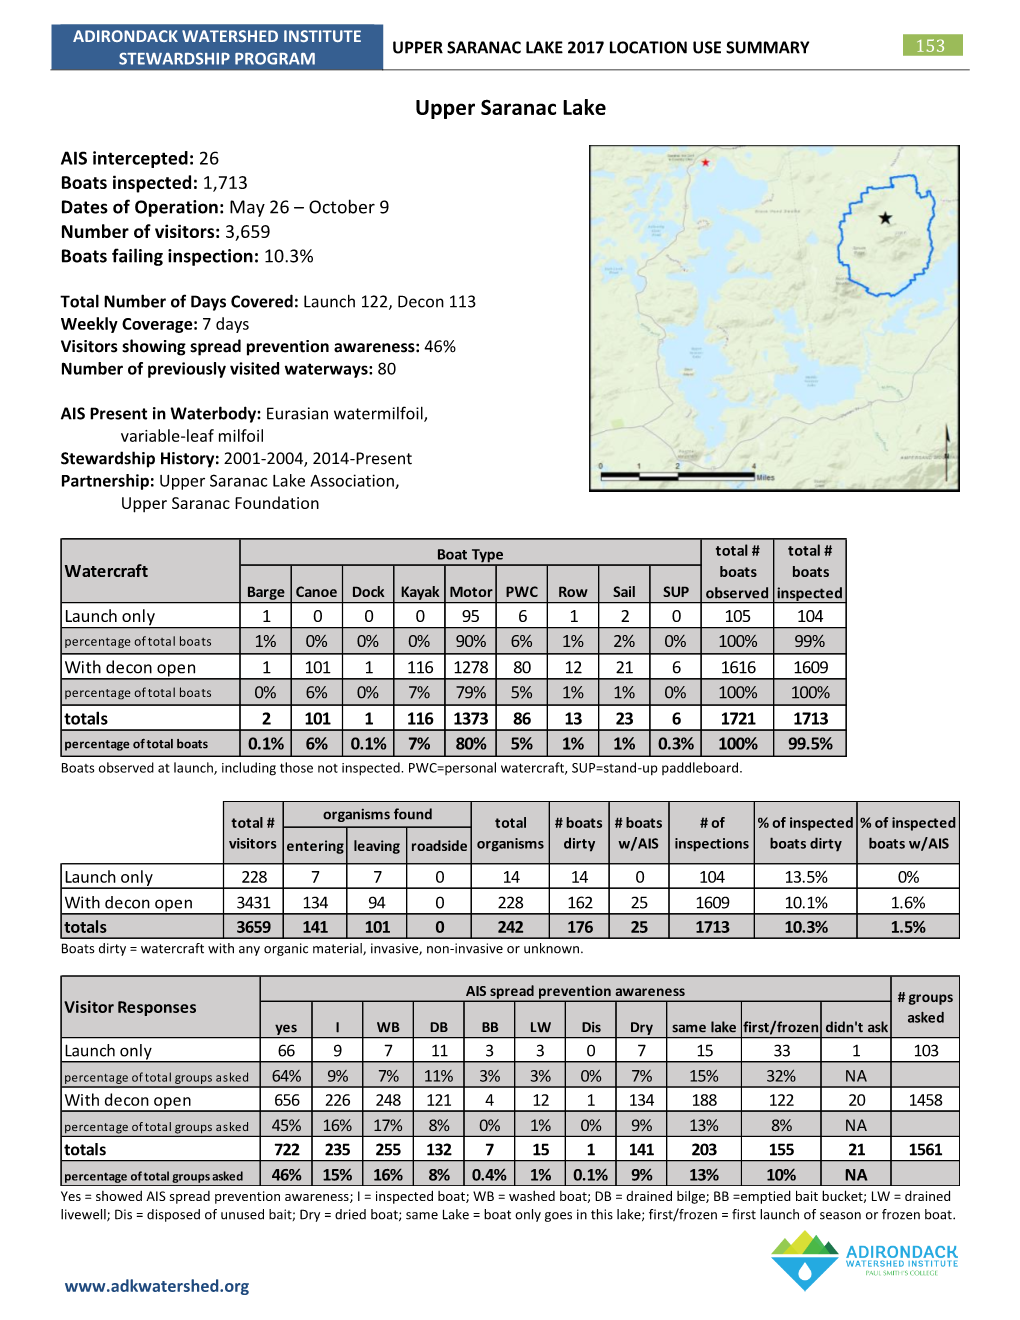 Upper Saranac Lake 2017 Location Use Summary 153 Stewardship Program